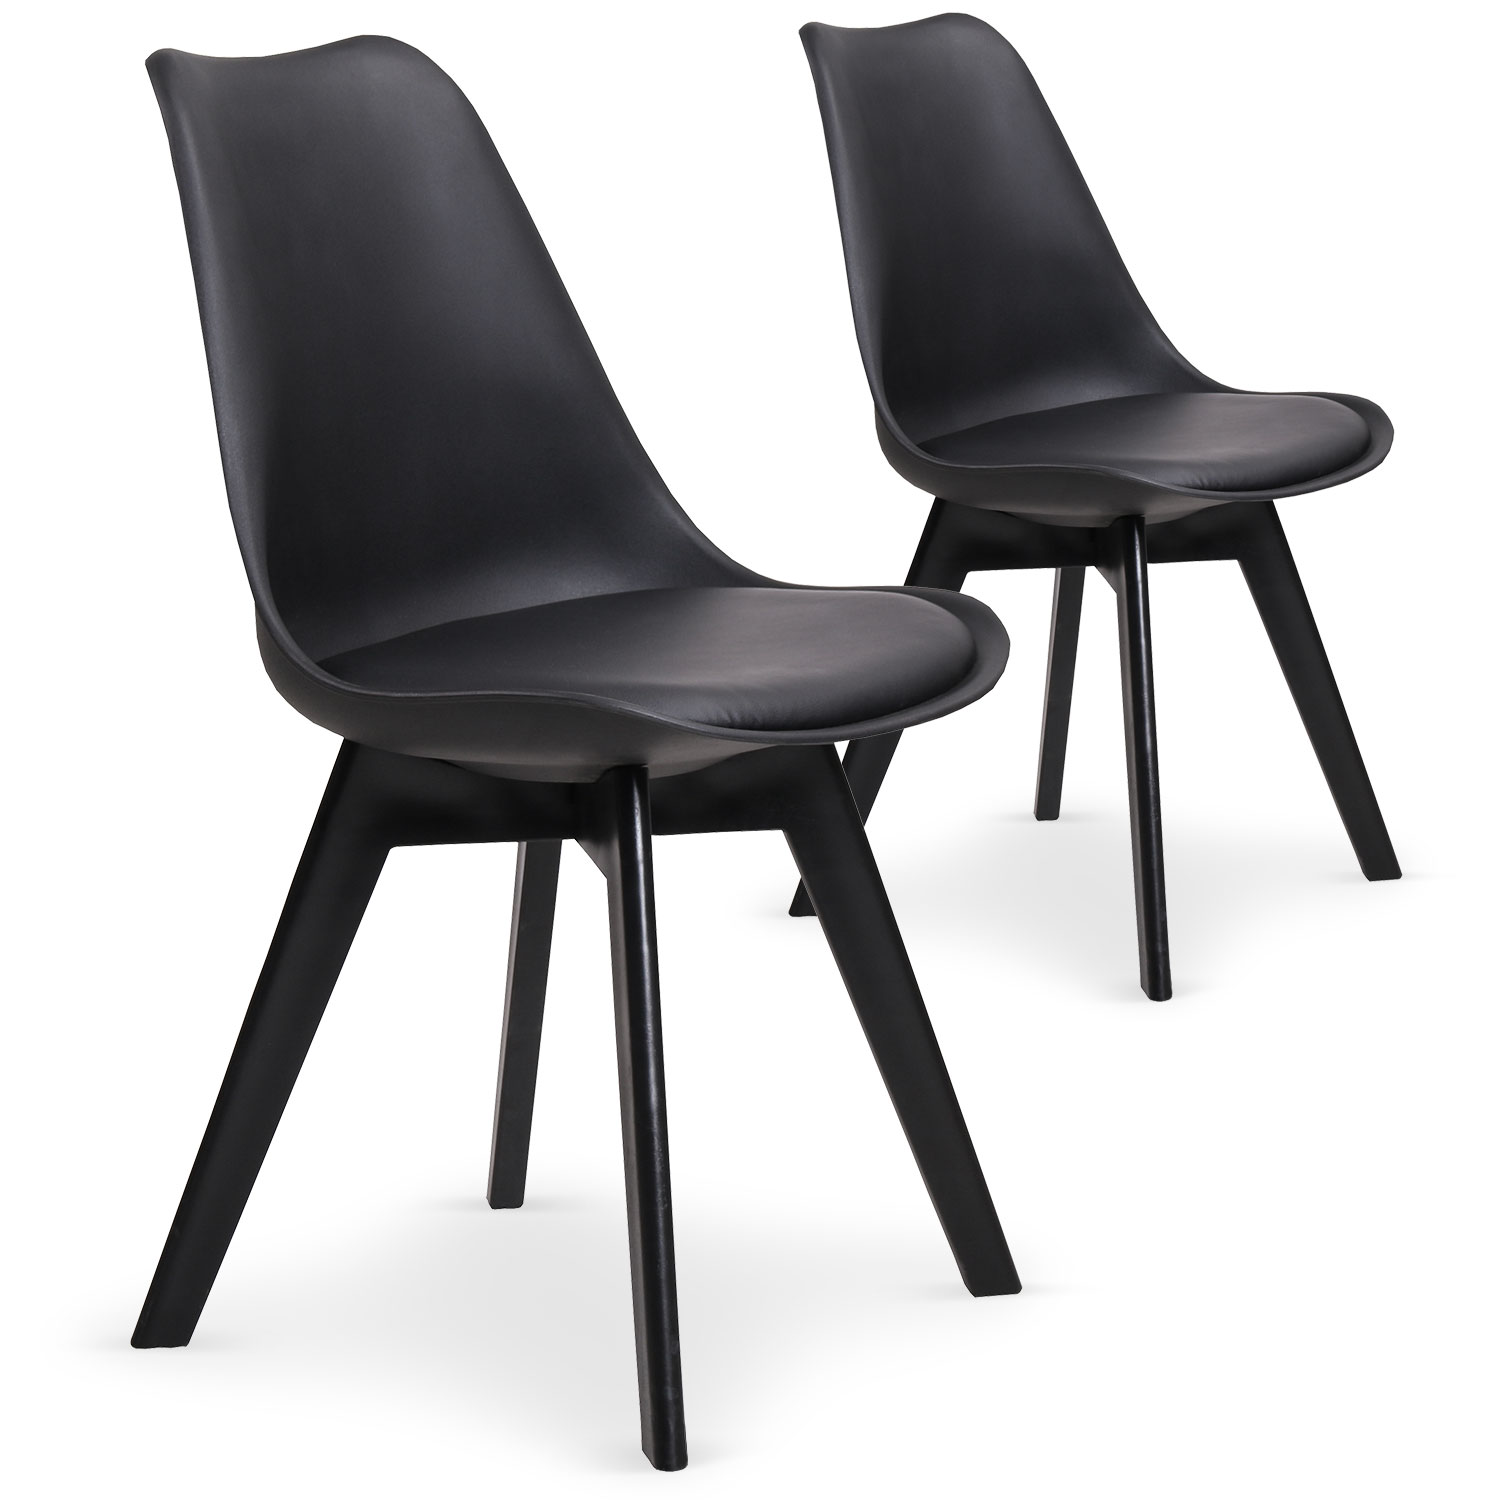 Chaise design scandinave noire norway